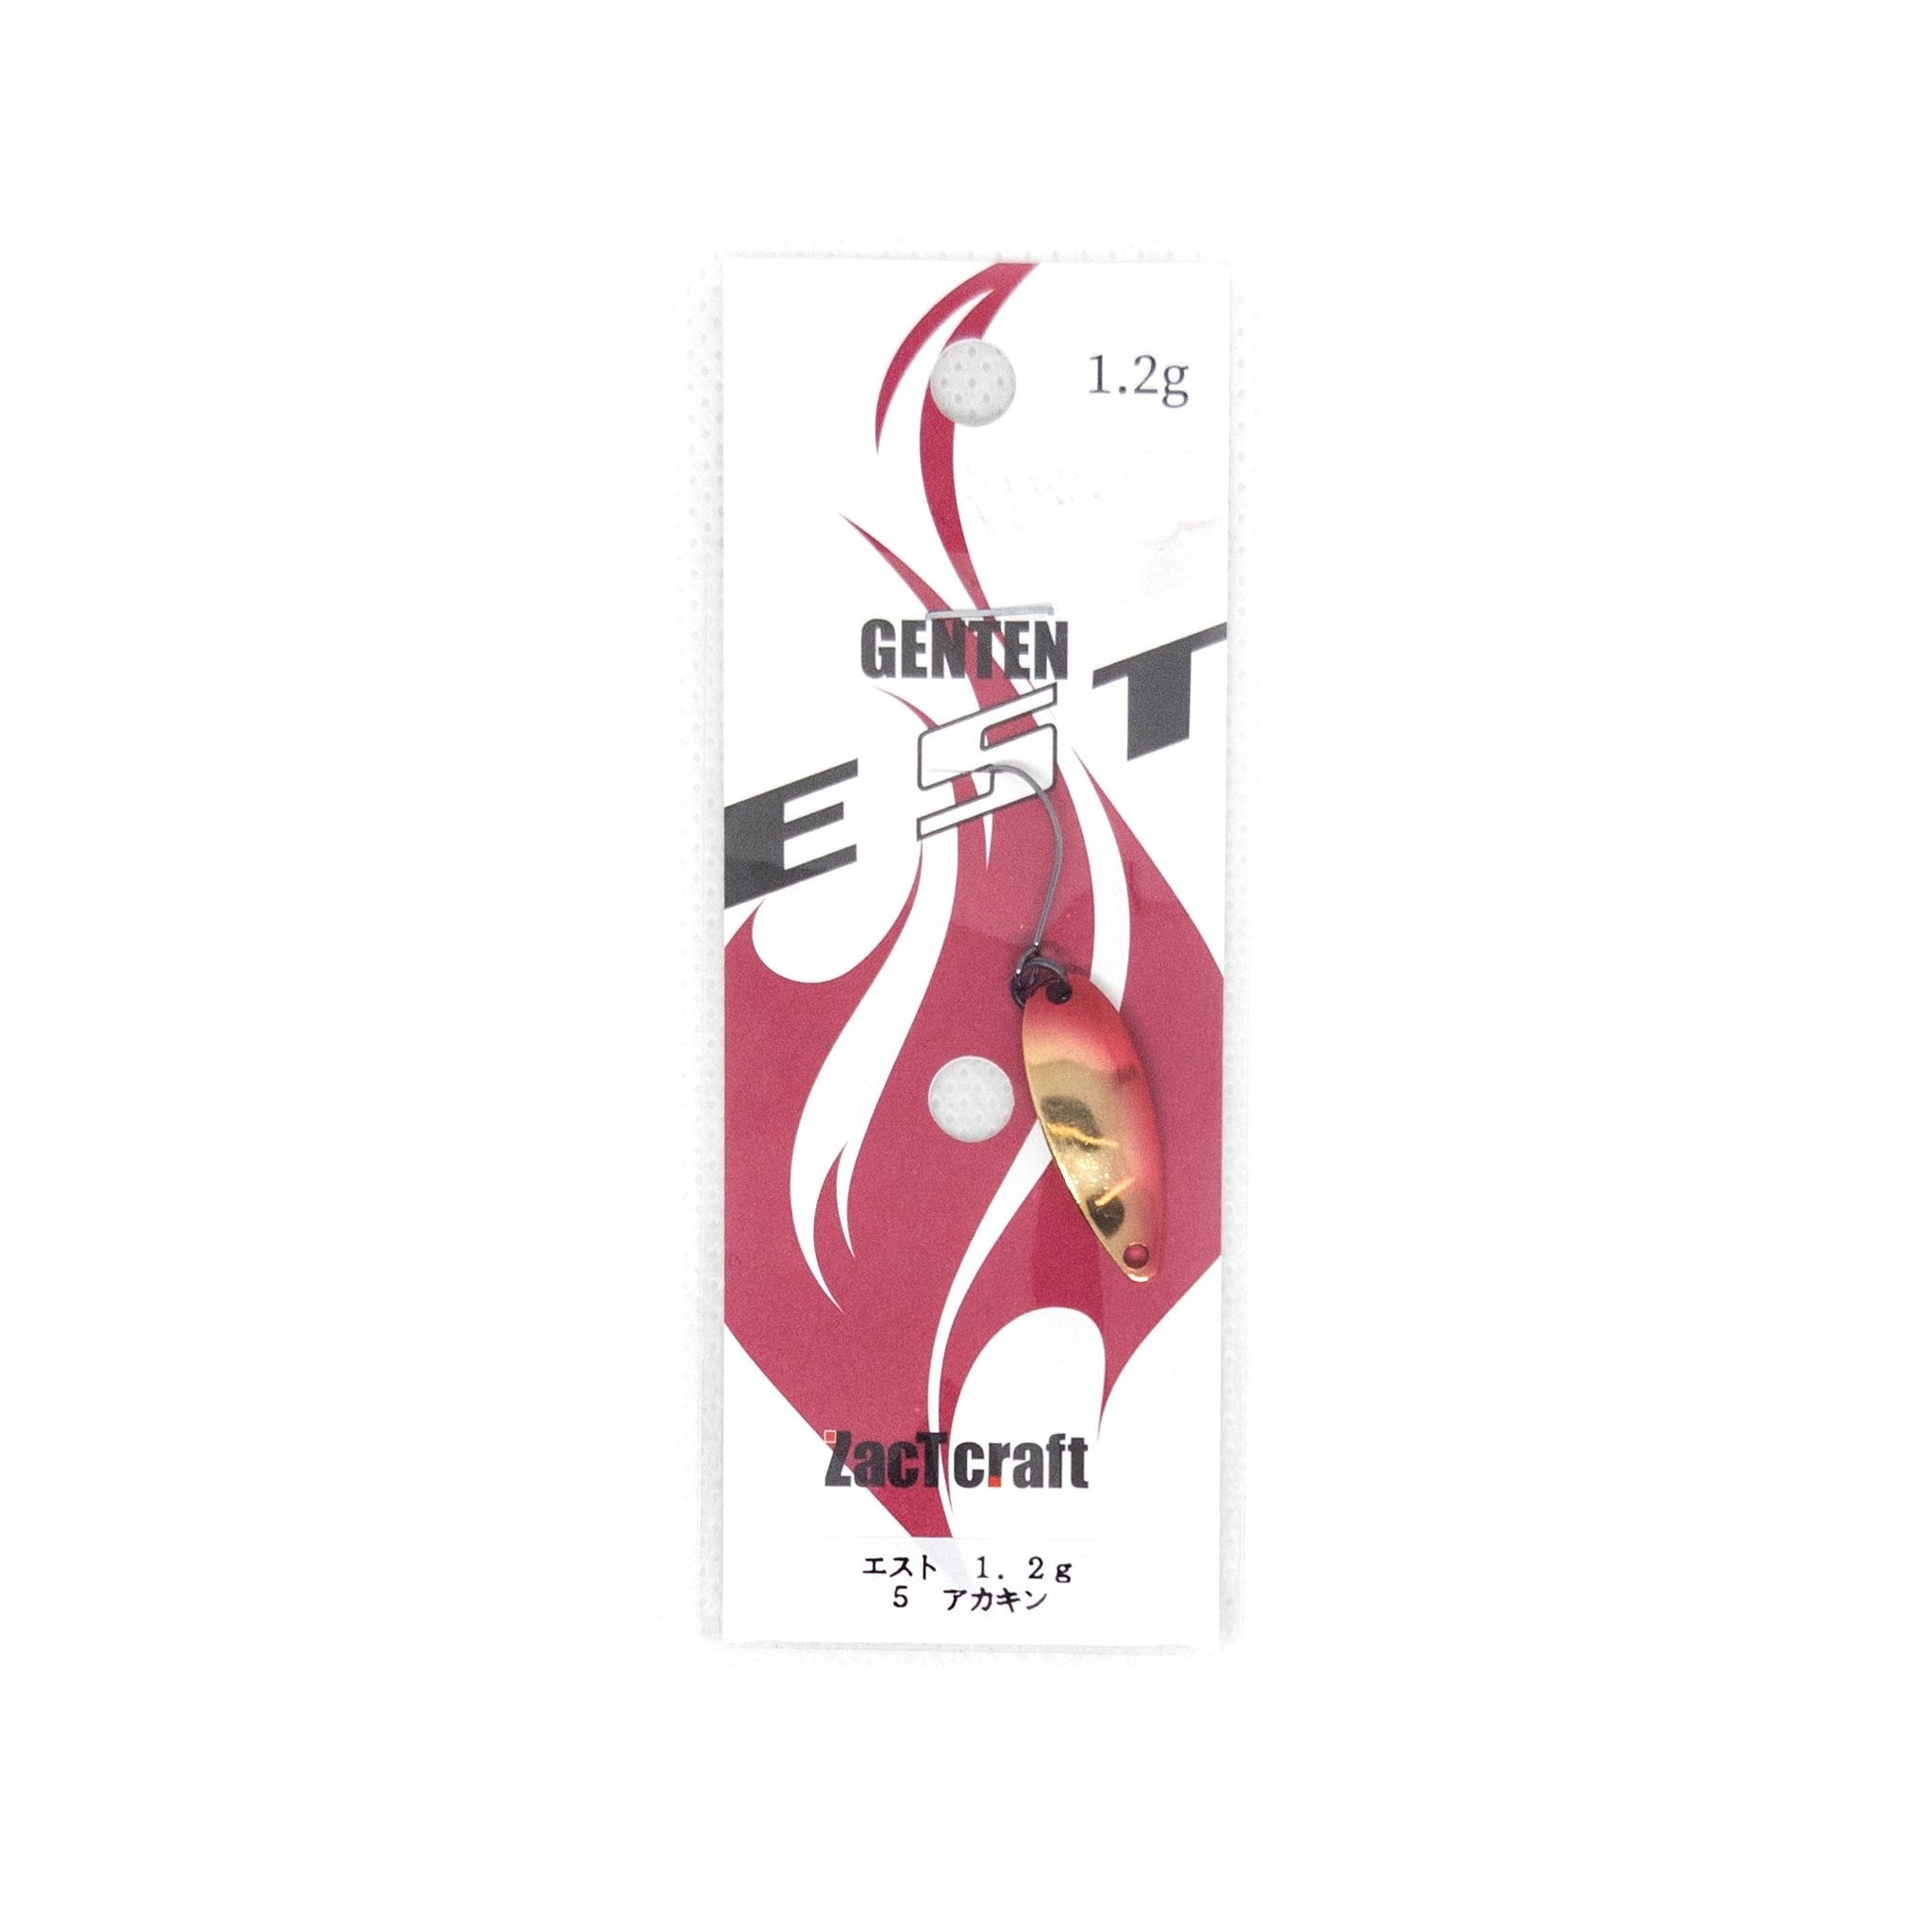 ZactCraft GENTEN EST 1.2g Trout Spoon Color "#05 Red Kin" - The Borrowed Lure